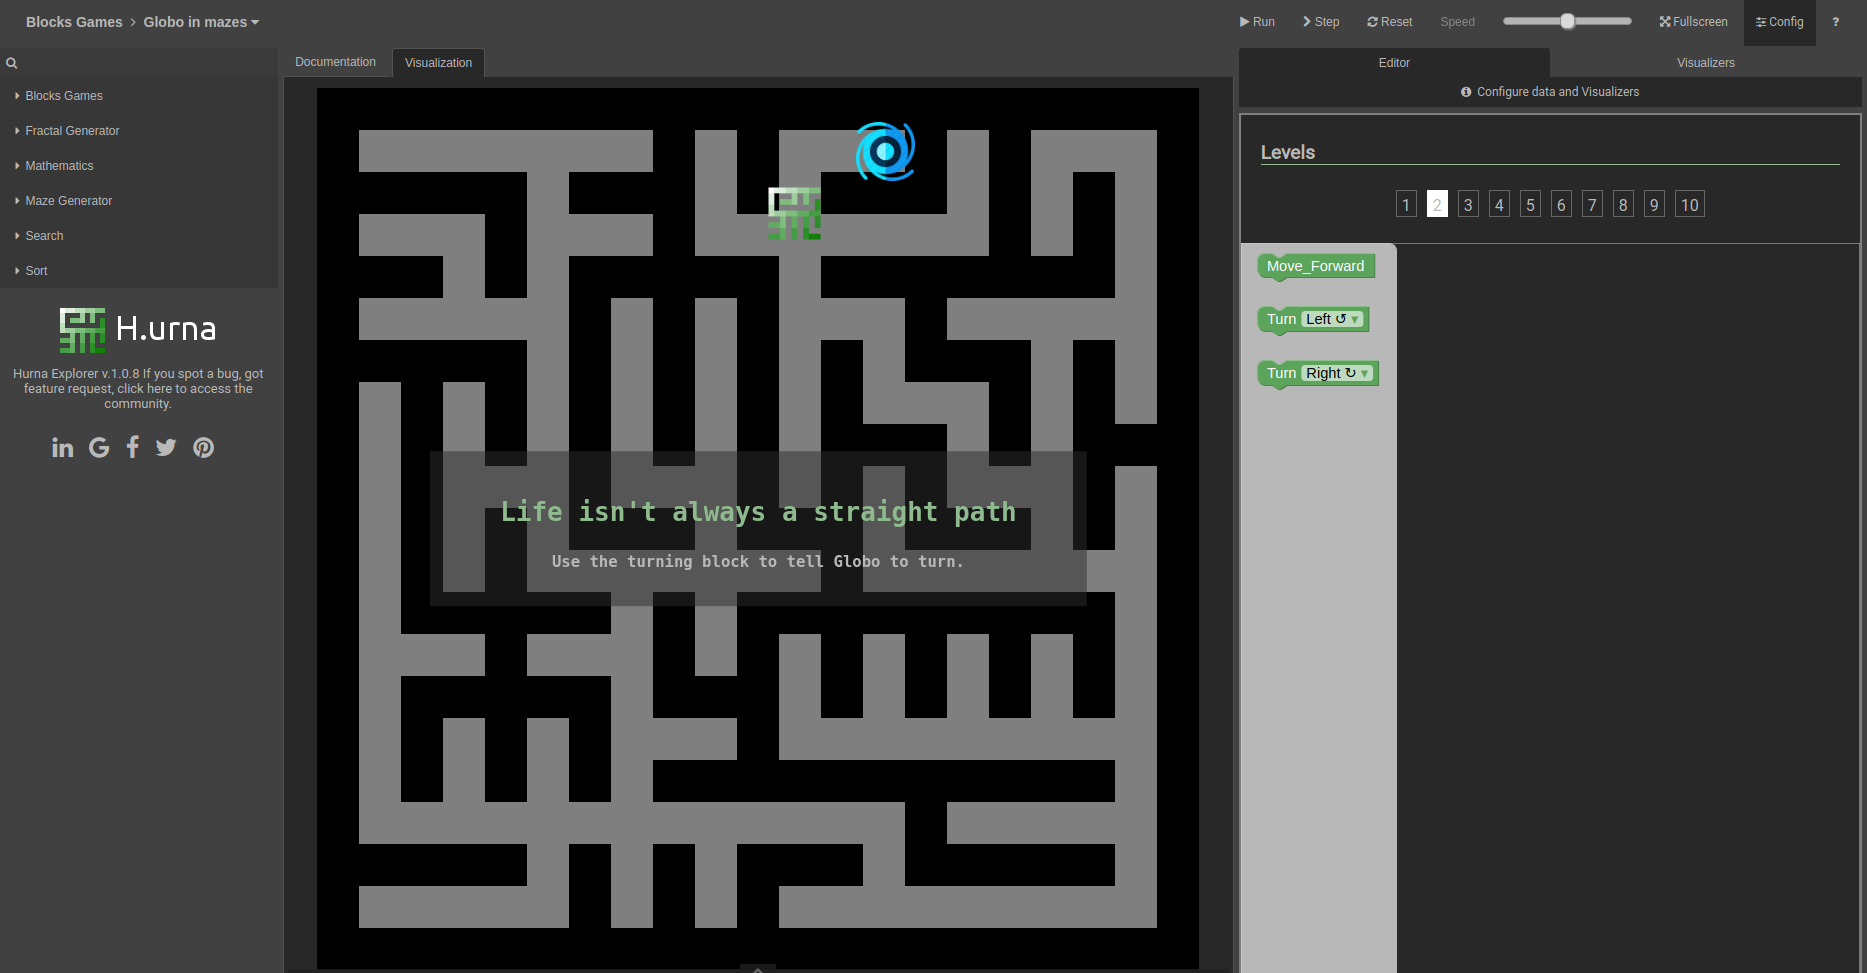 Screenshot Labyrinthe - H.urna Blocks - Globo dans les labyrinthes - Niveau 02